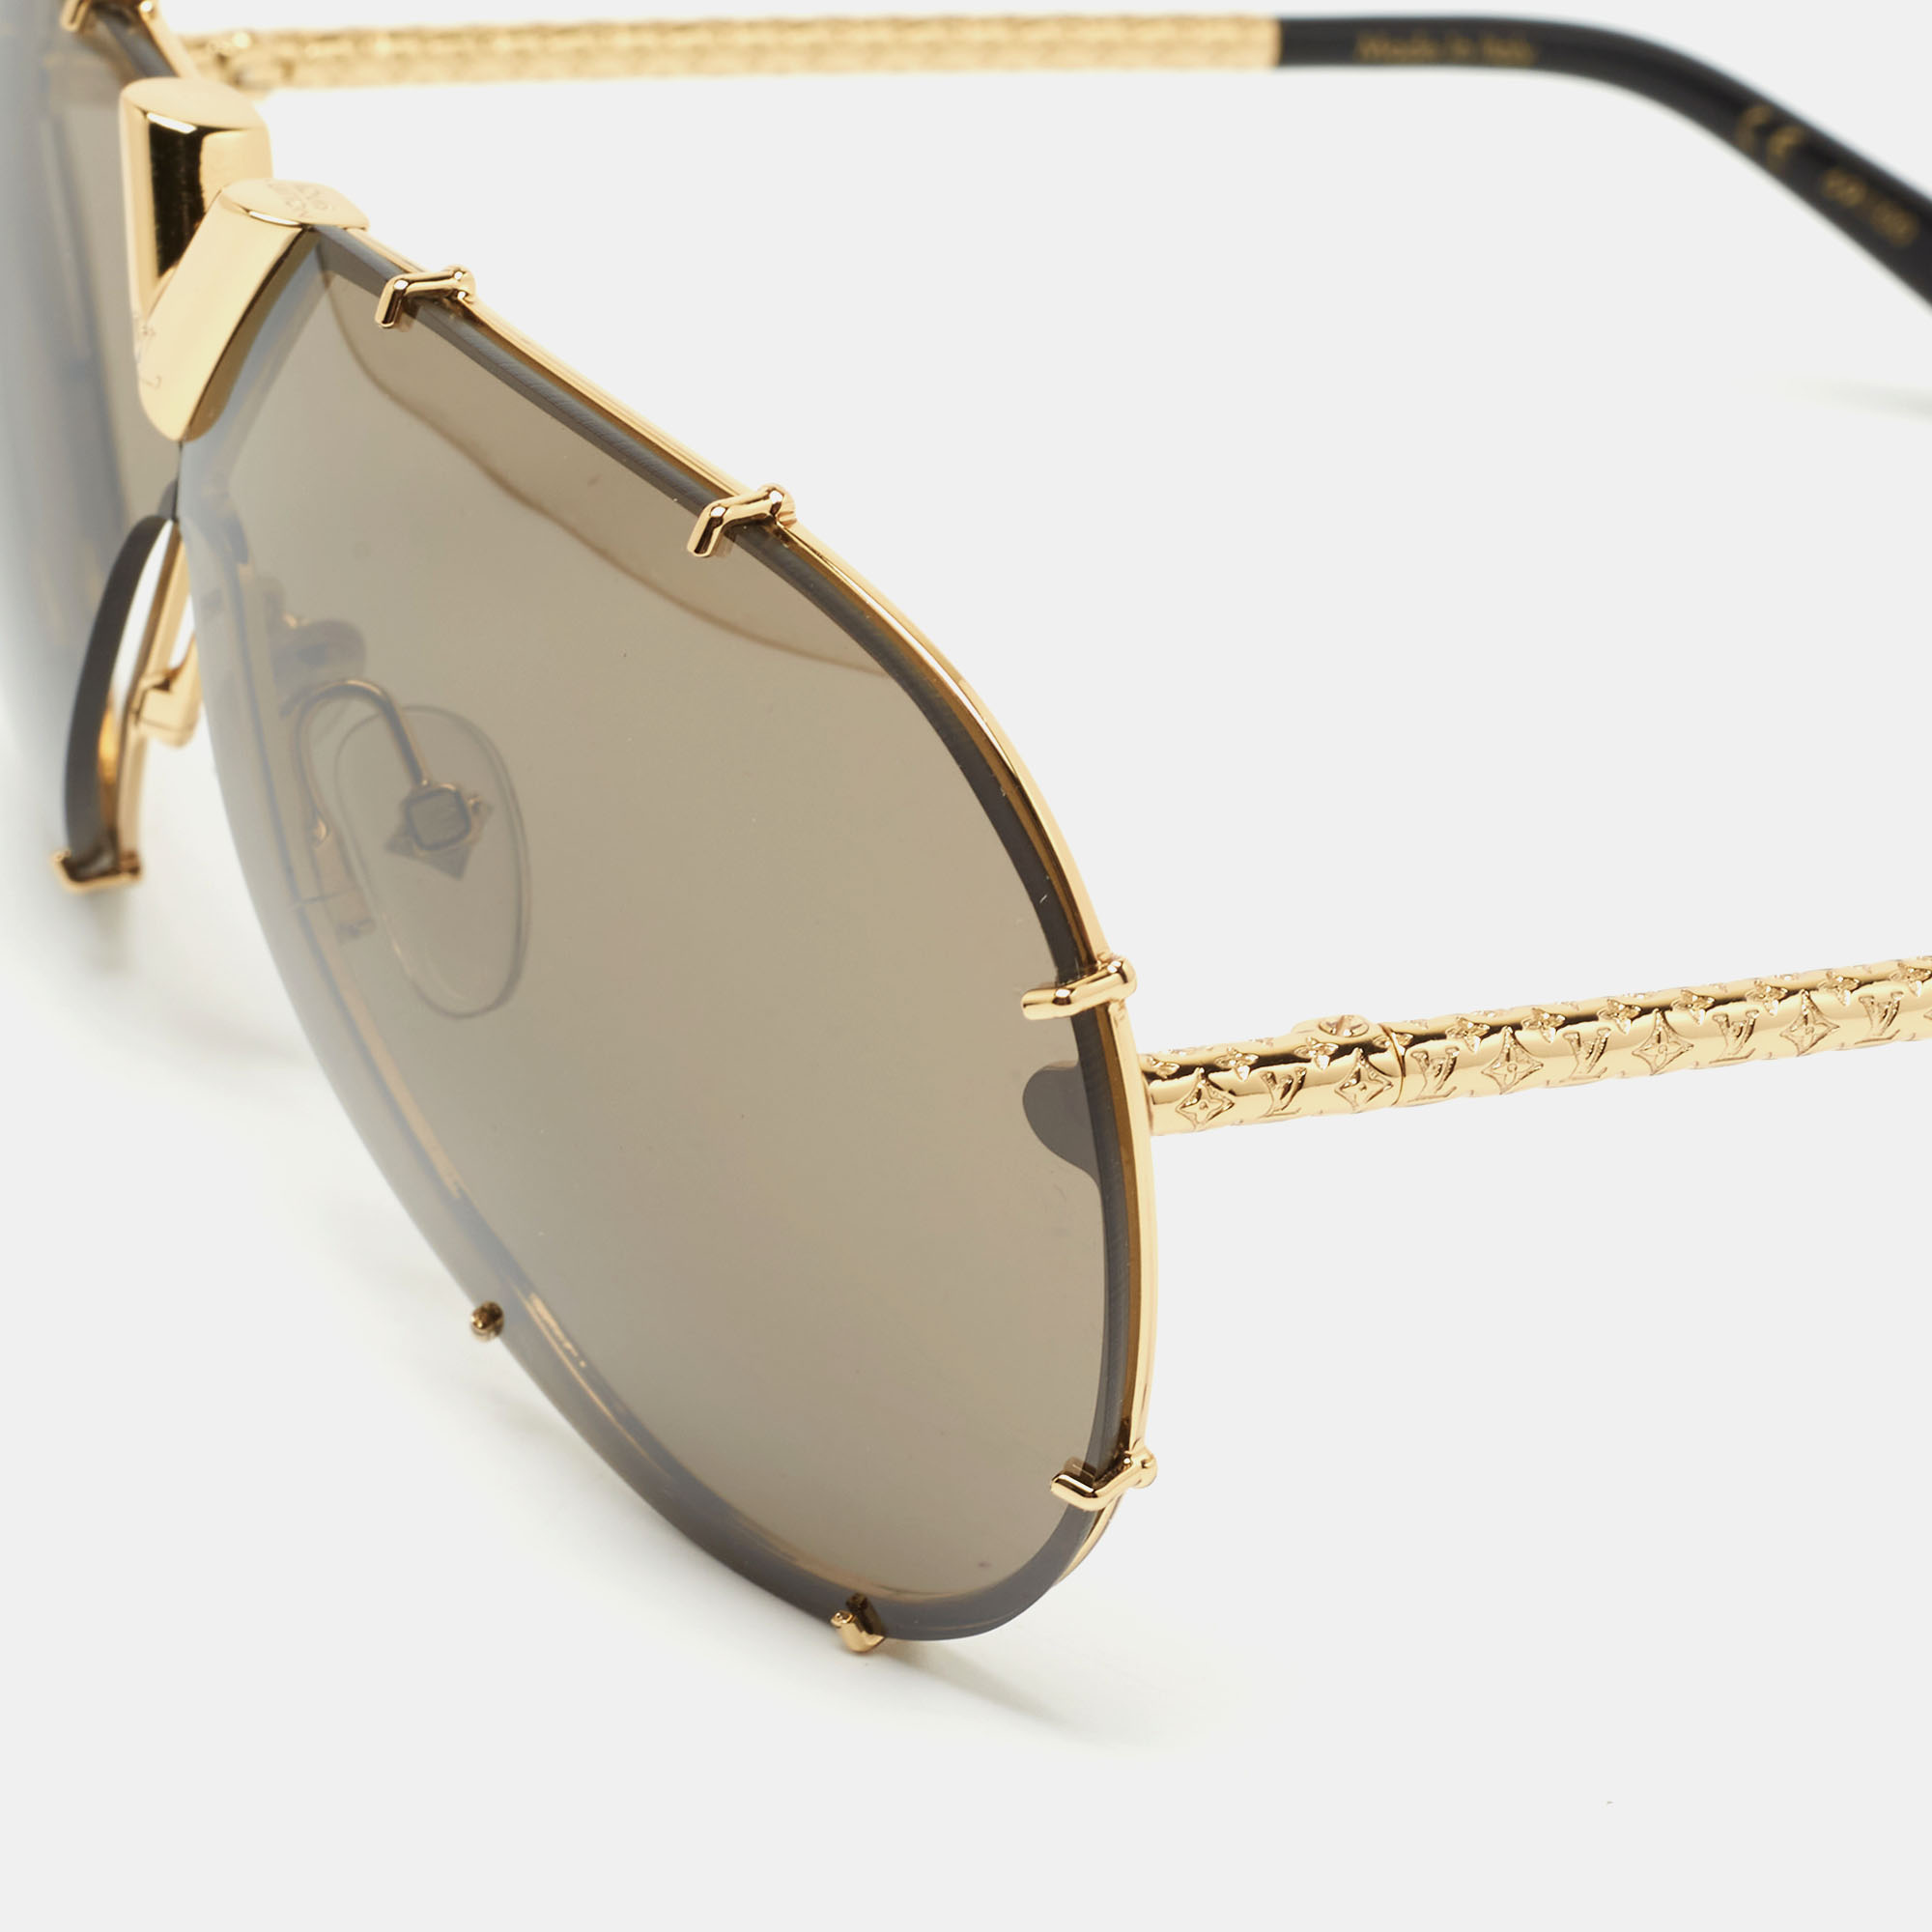 Louis Vuitton 2019 LV Drive Sunglasses #SPONSORED #Vuitton #Louis # Sunglasses